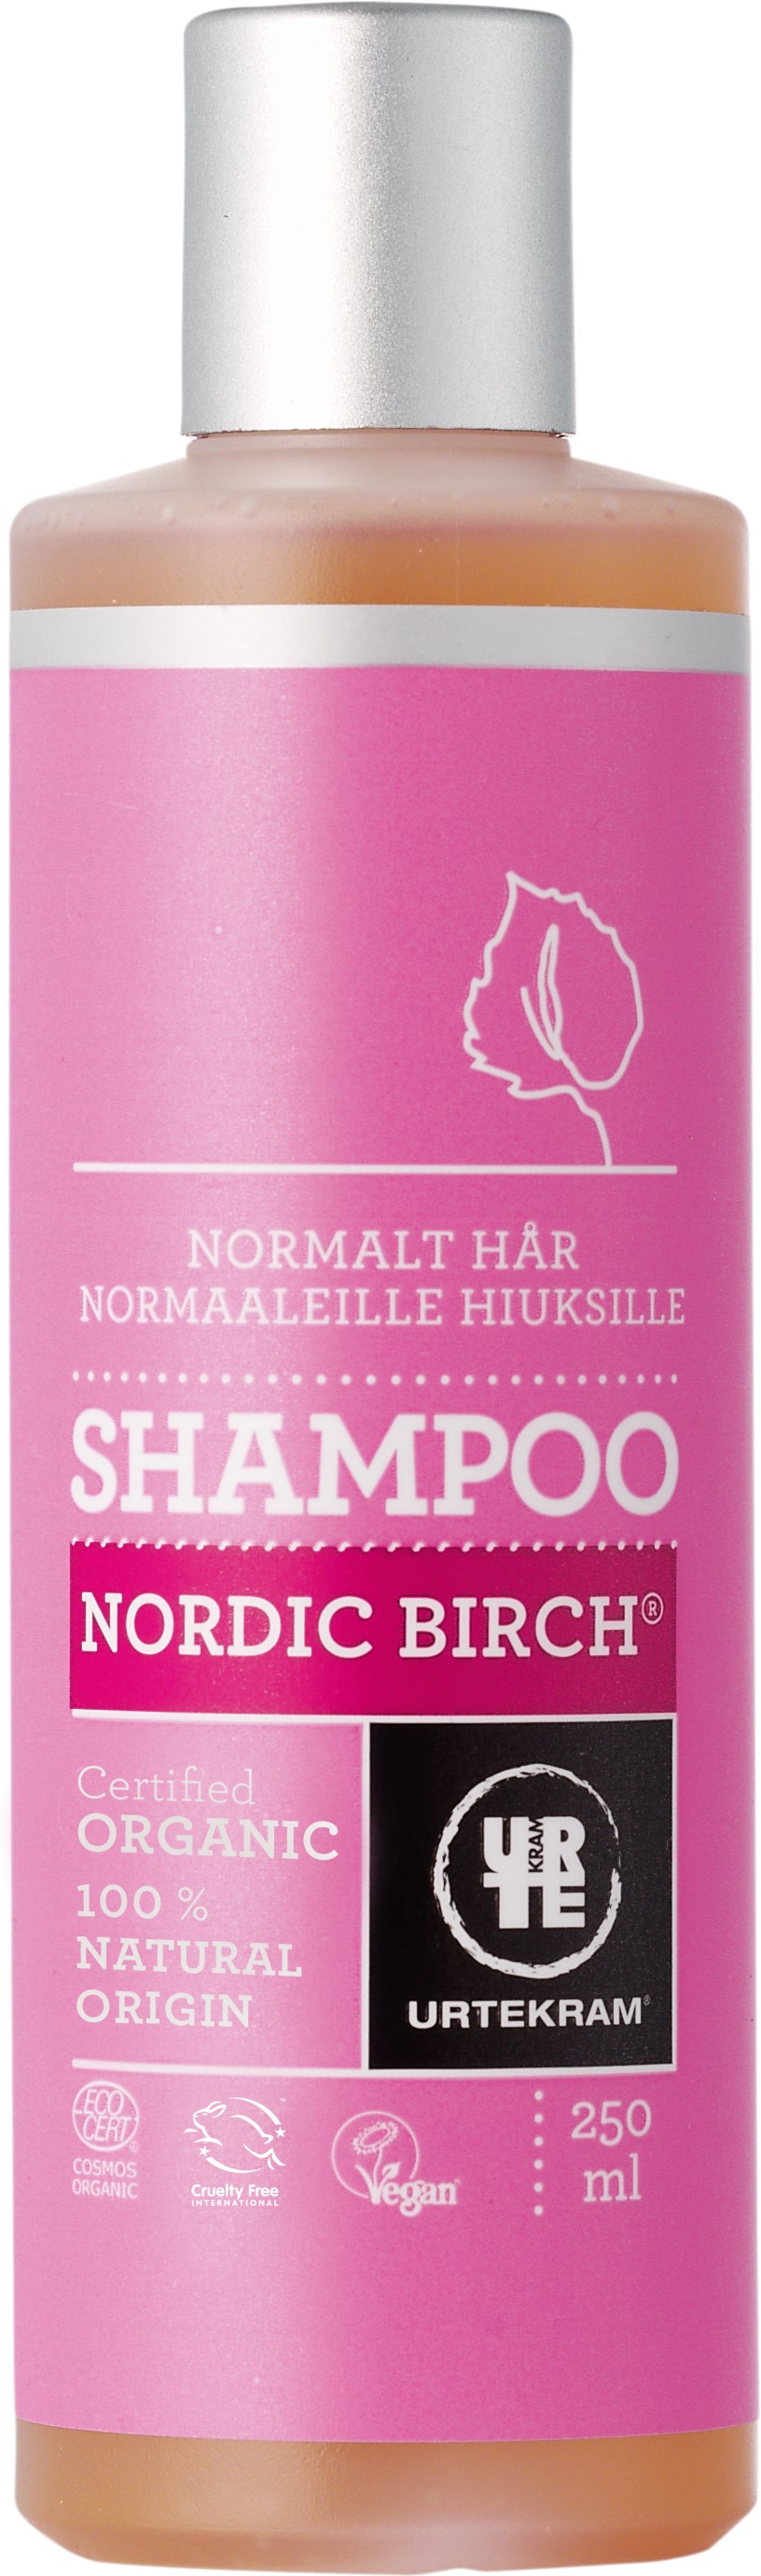 Urtekram Nordic Birch Shampoo Noramalt Hår 250ml